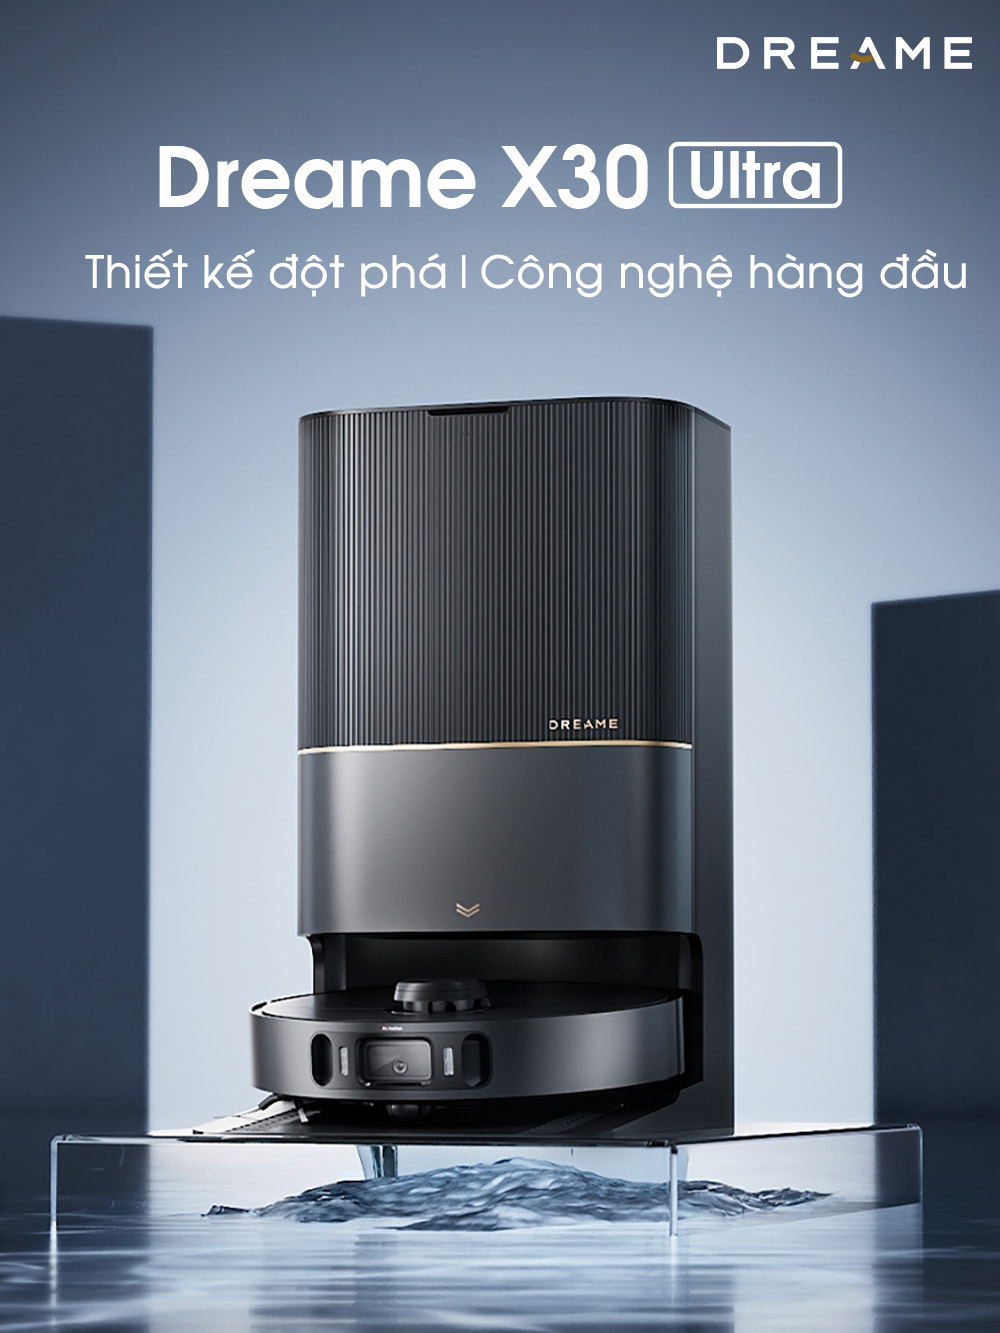 Dreame X30 Ultra